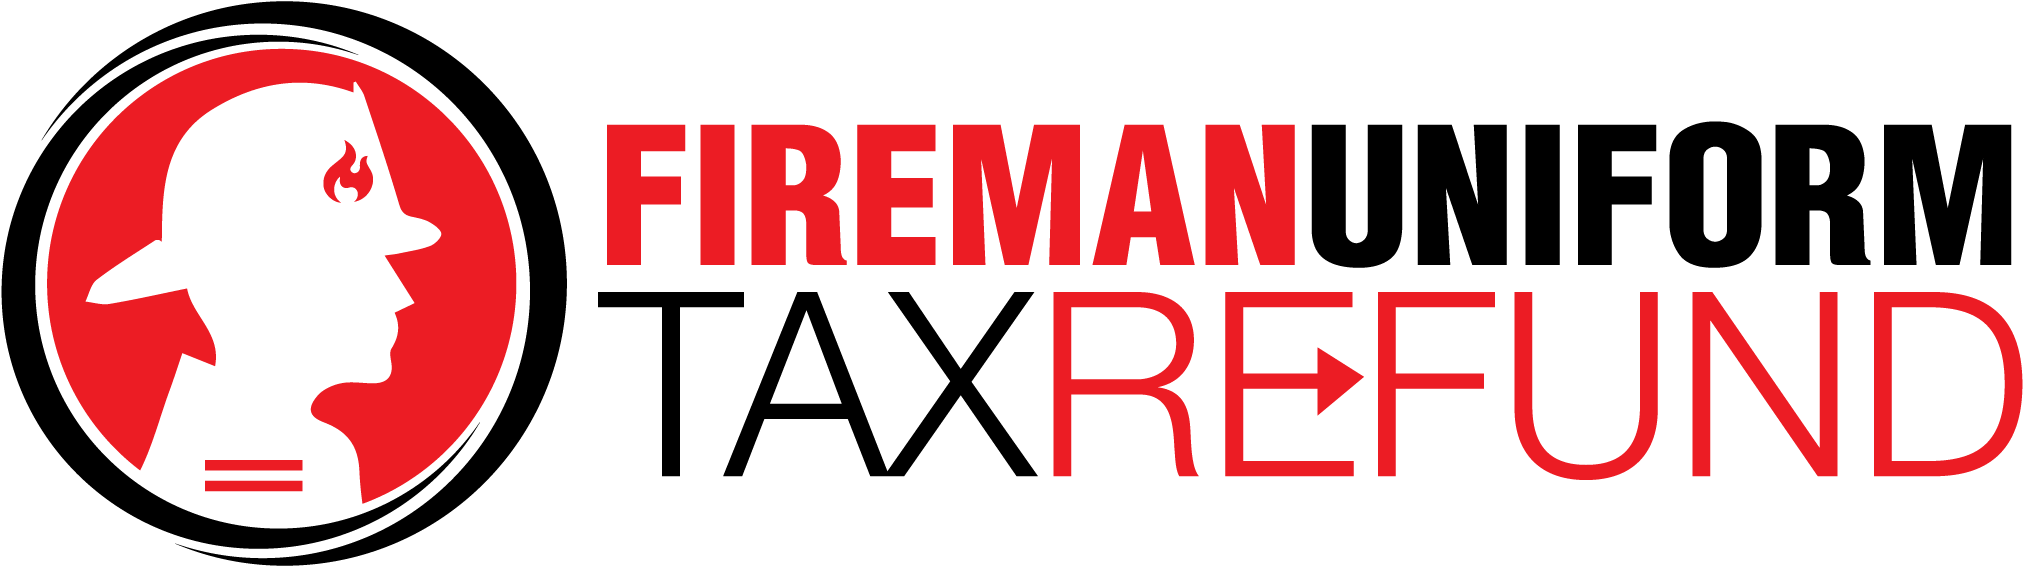 Fireman Uniform Tax Refund - Tax Refund (2070x615), Png Download